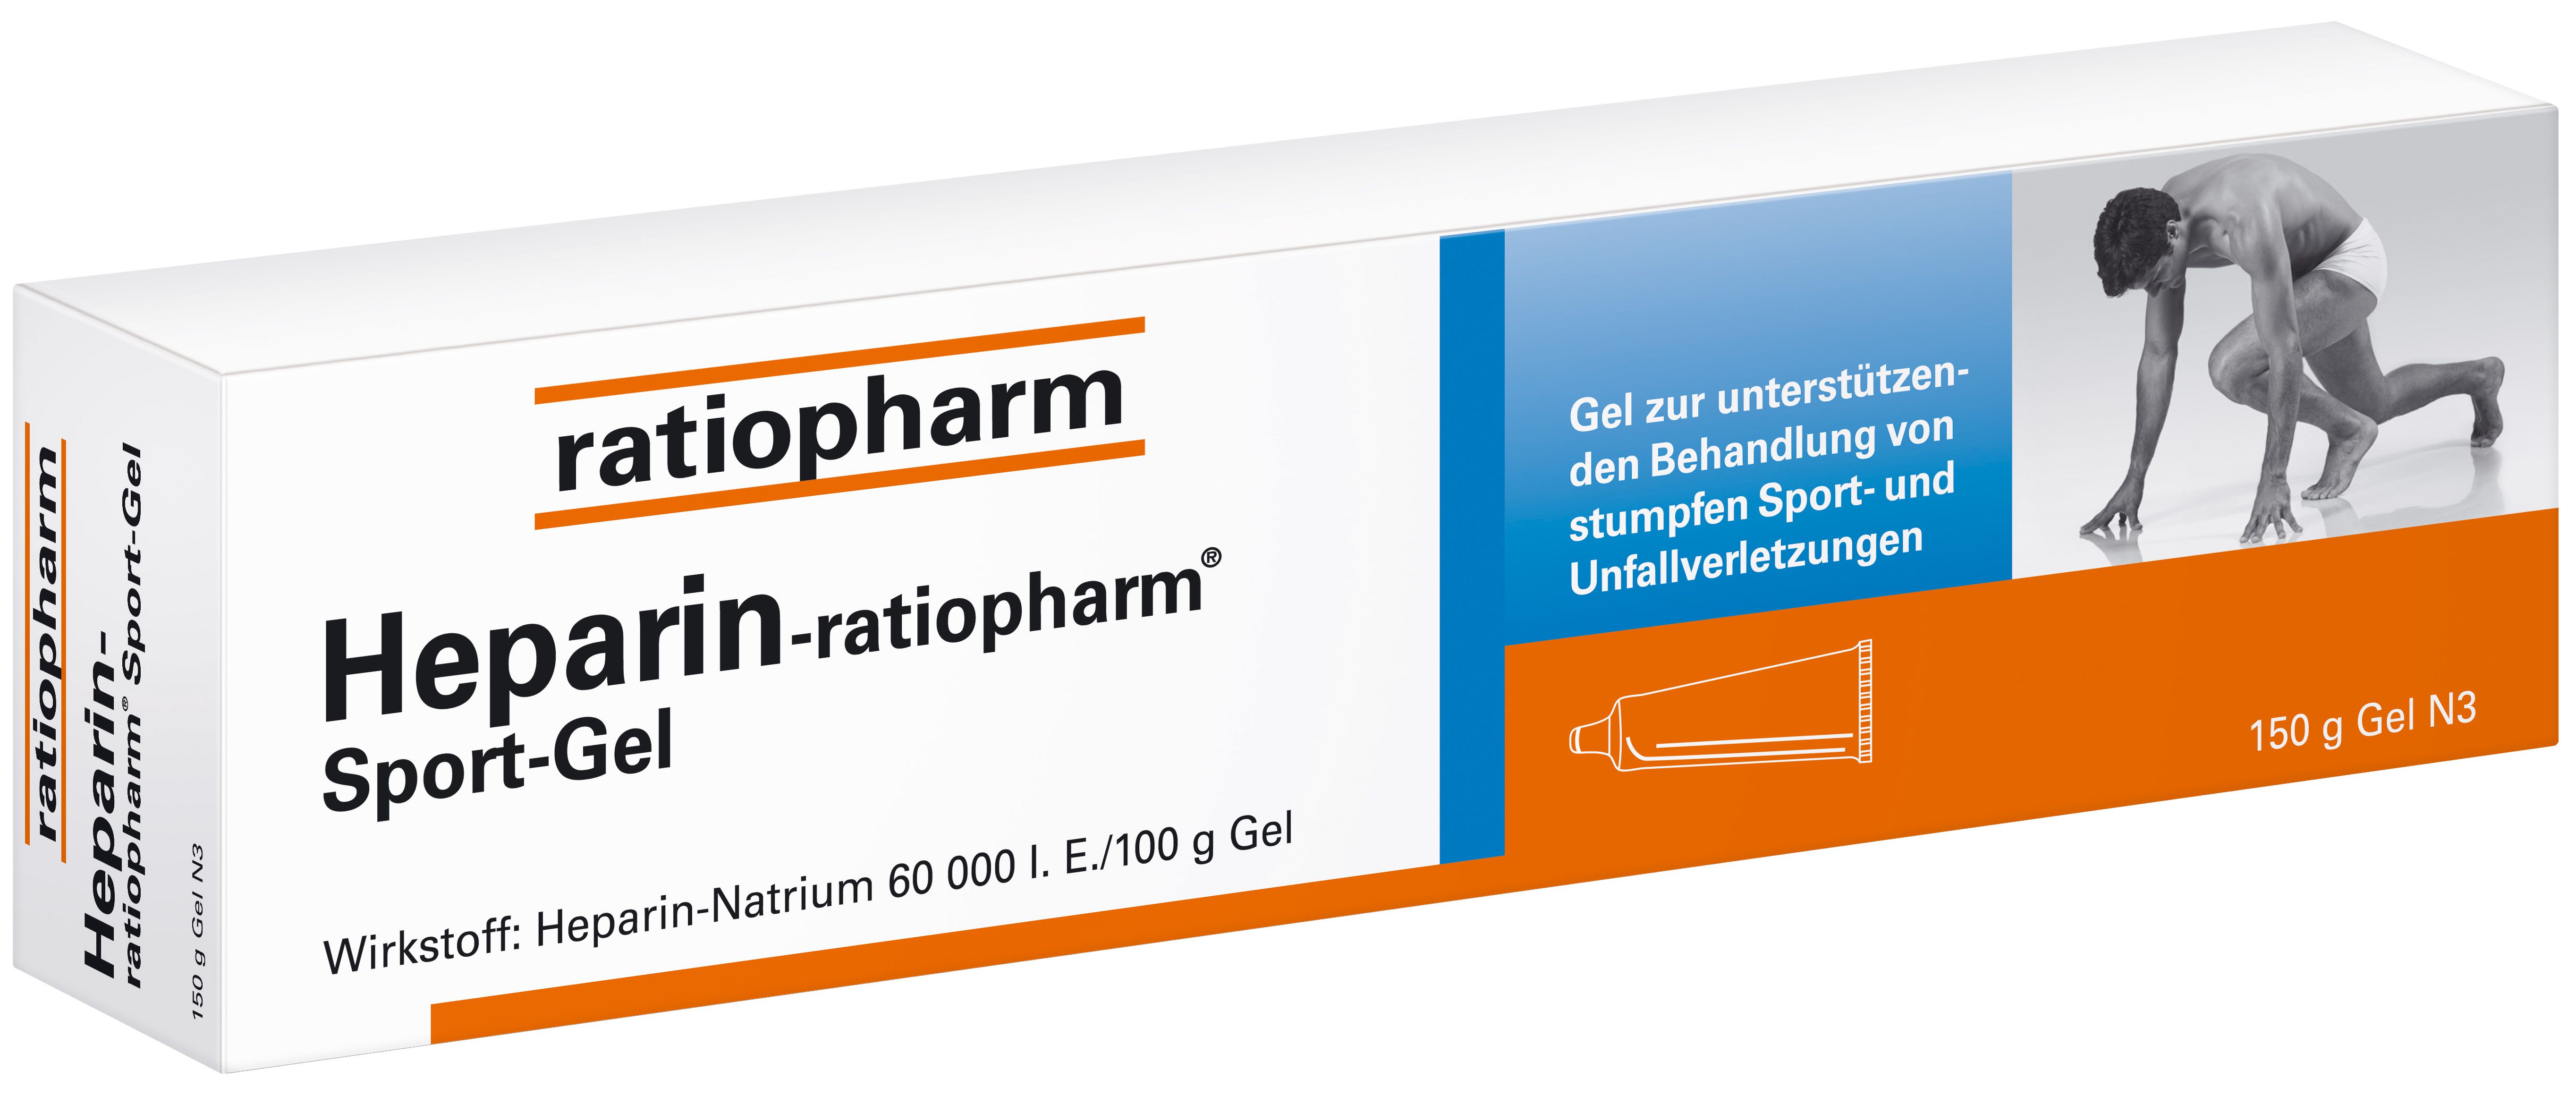 Ratiopharm. Ратиофарм диски. Heparin Ointment. Sport gels